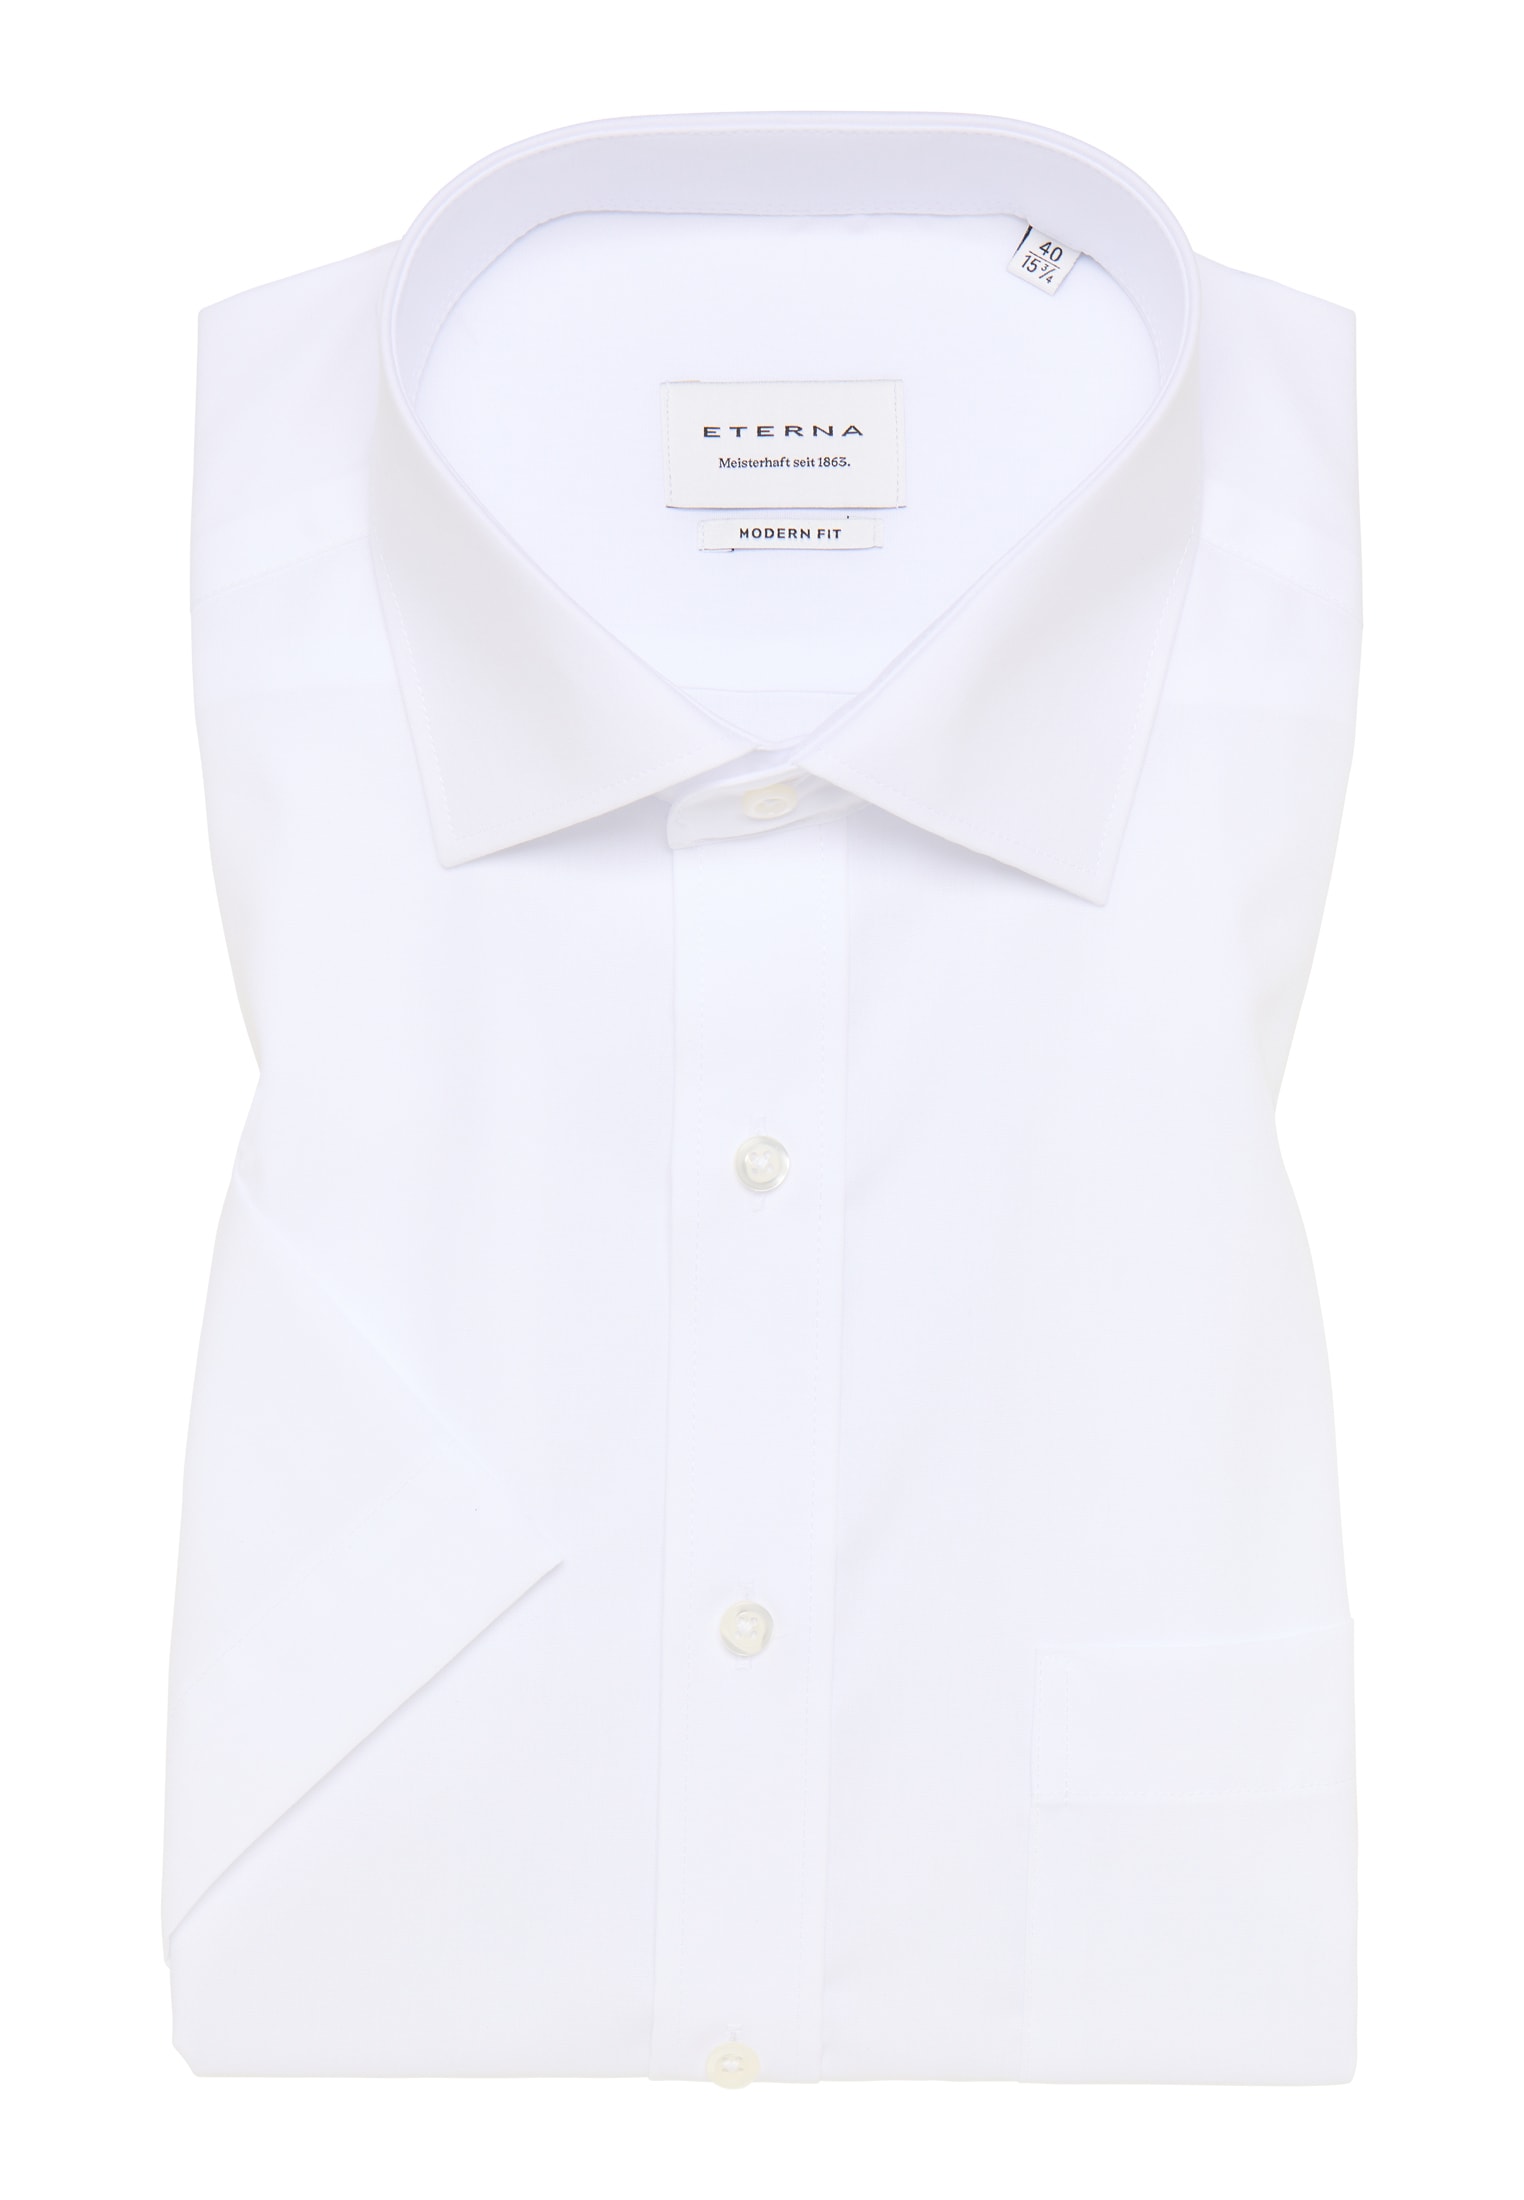 MODERN FIT Original Shirt in weiß unifarben | weiß | 37 | Kurzarm |  1SH00092-00-01-37-1/2 | 